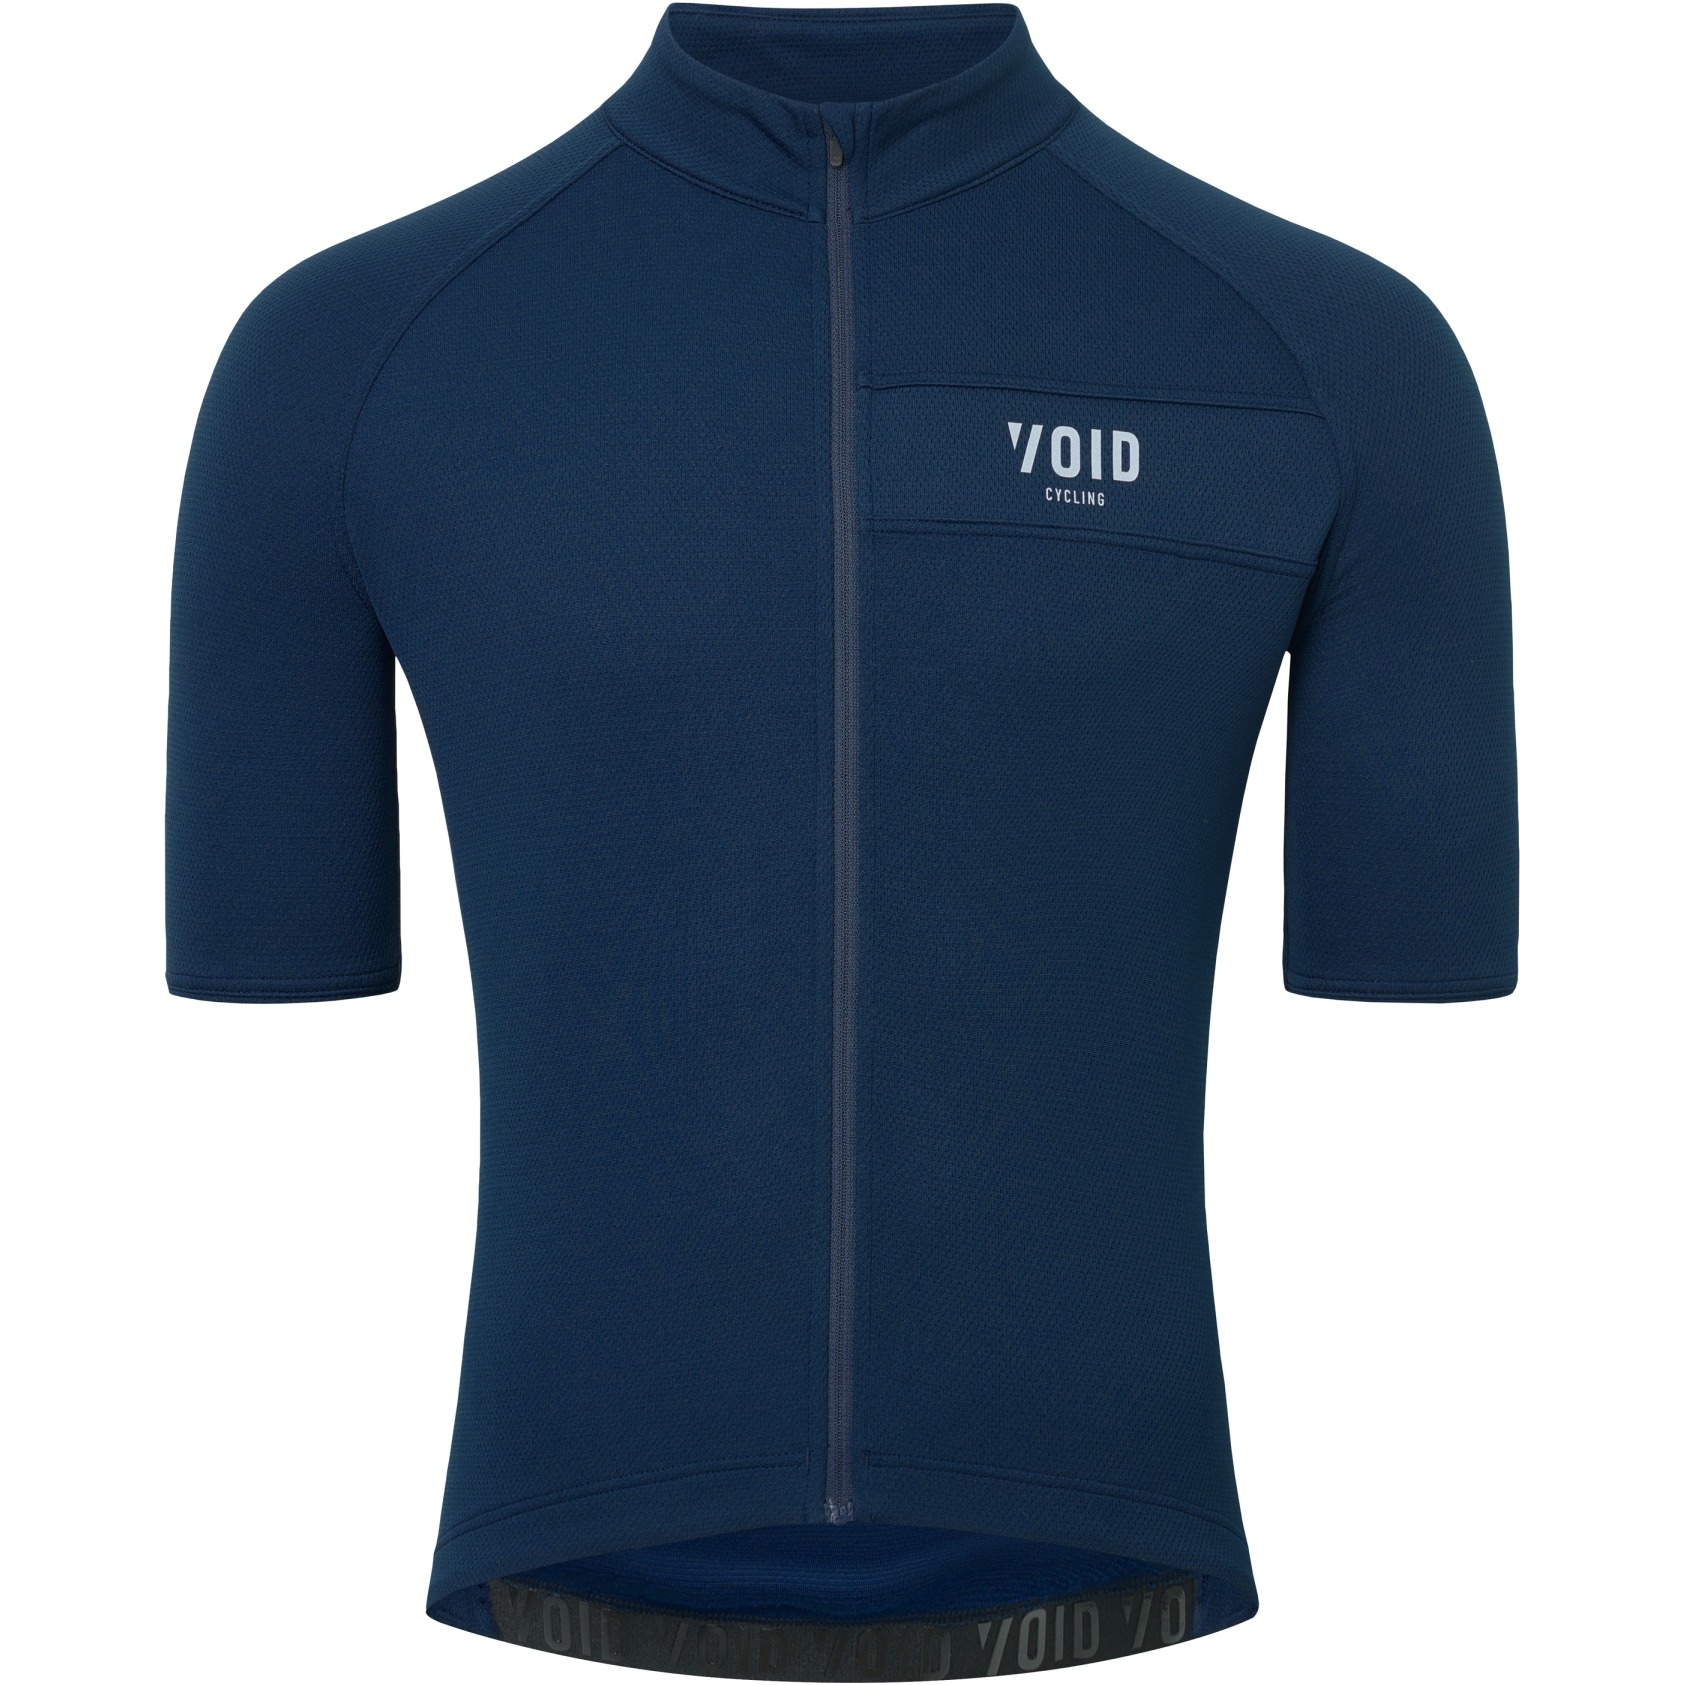 Productfoto van VOID Cycling Merino Short Sleeve Jersey - Dark Blue